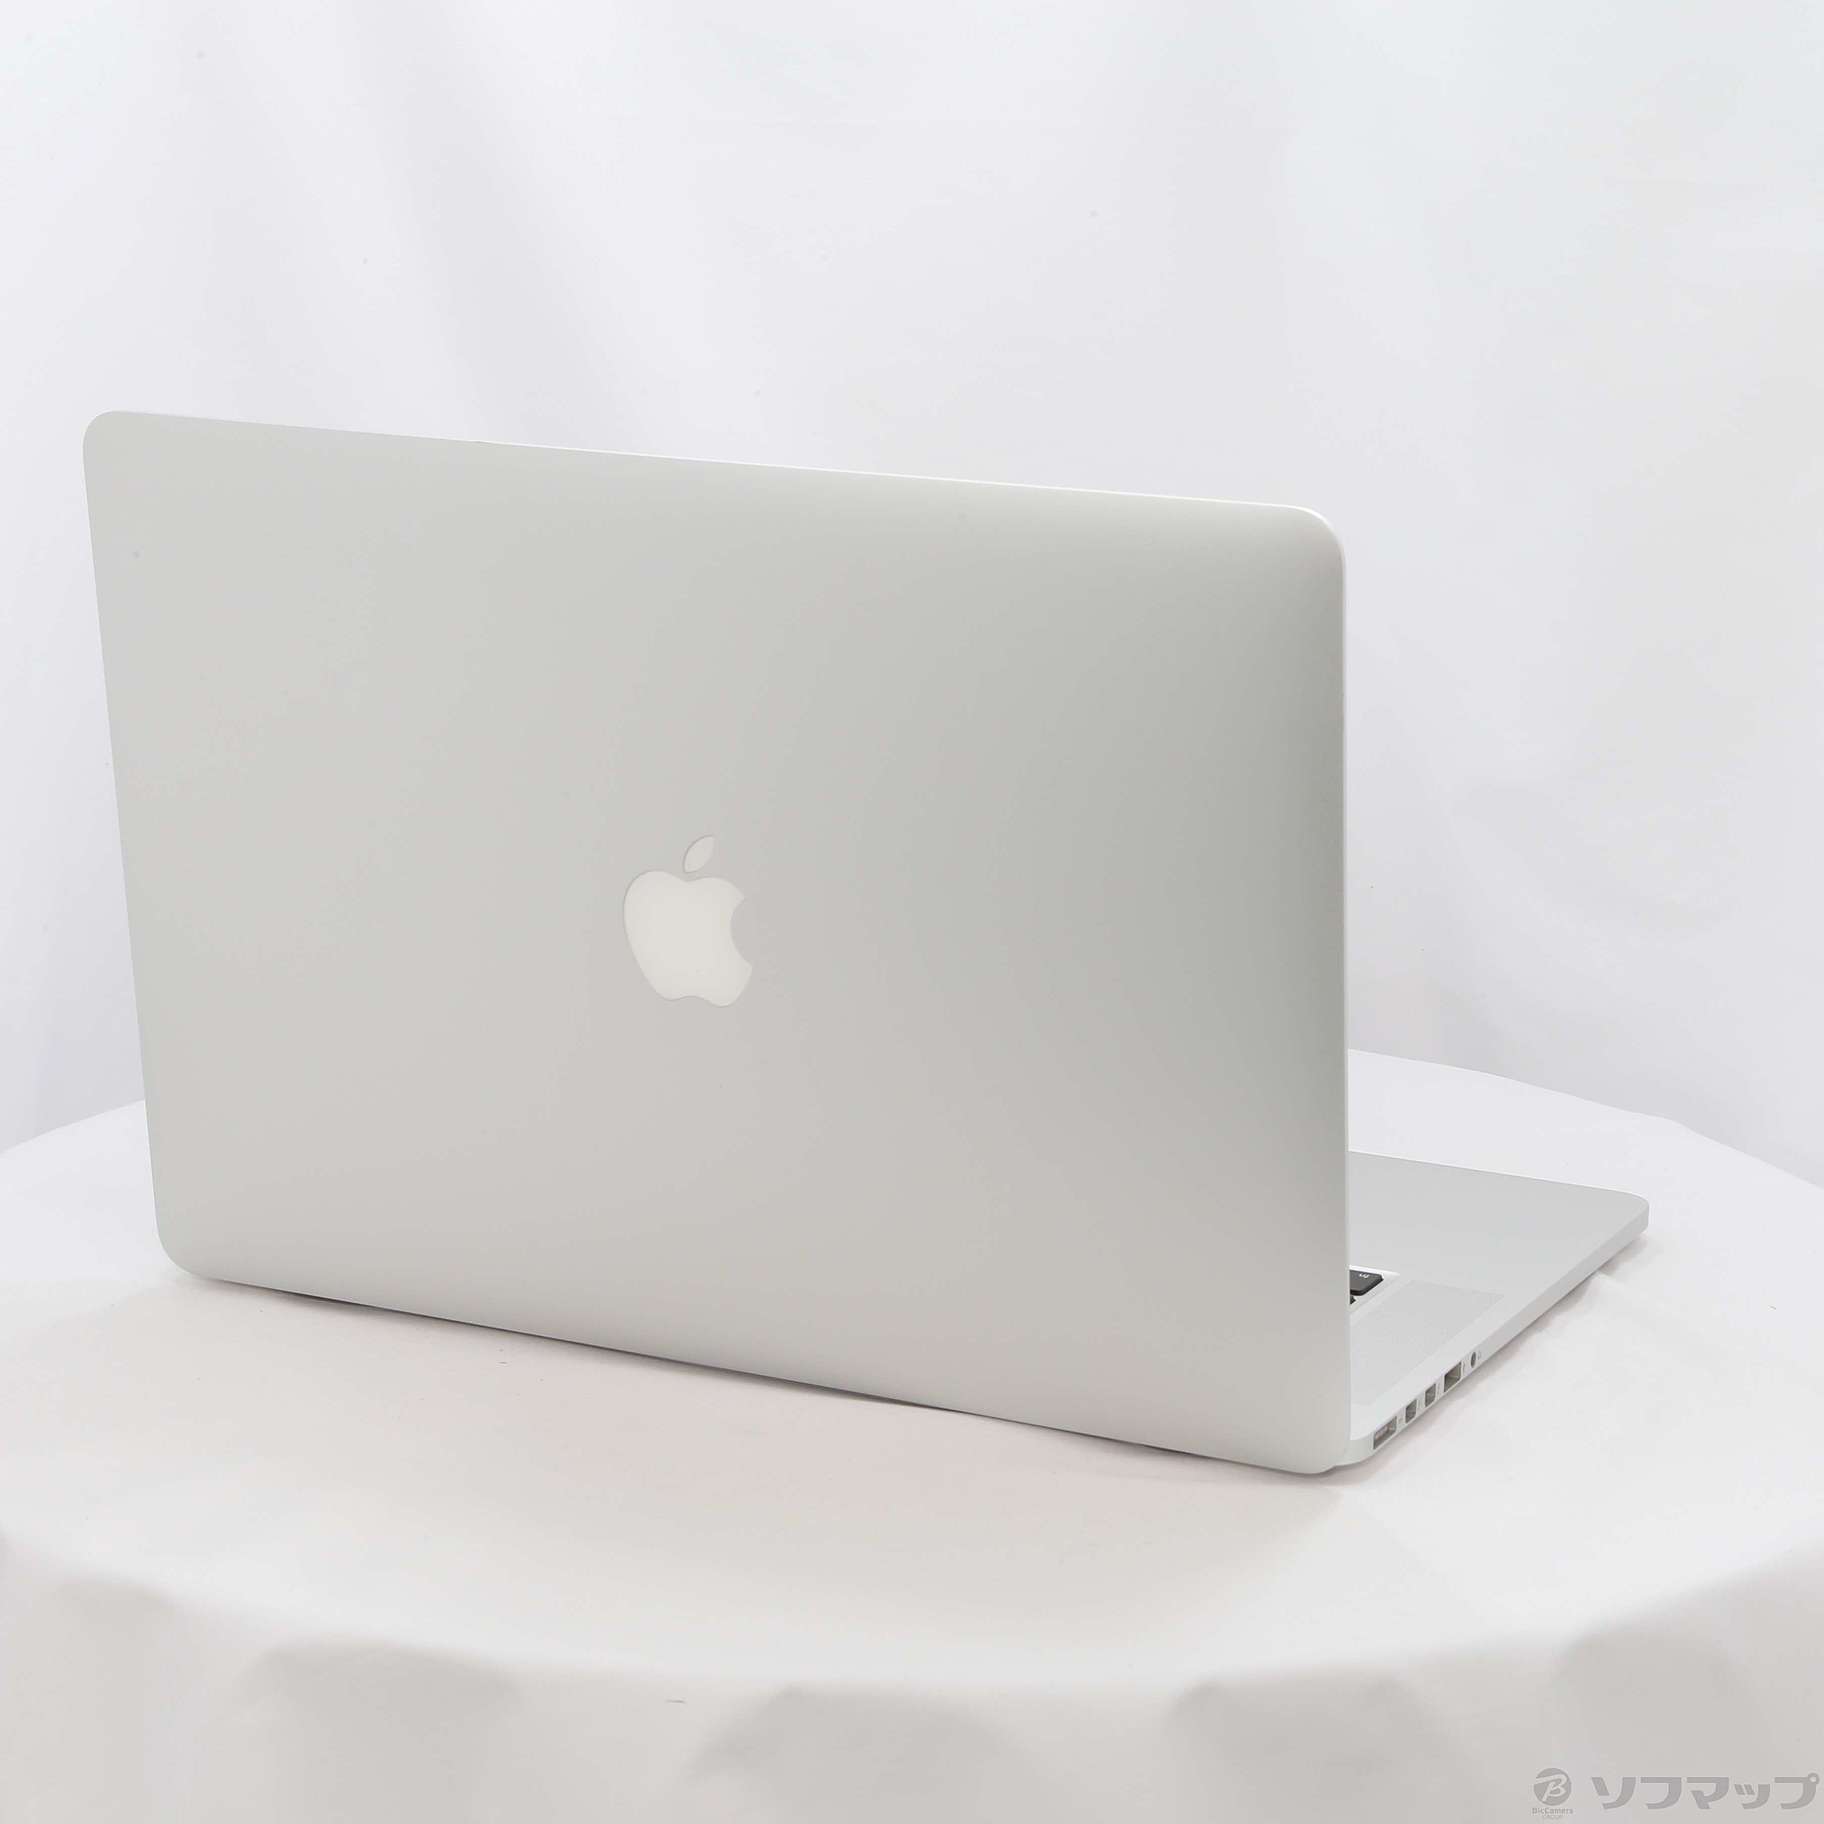 中古】セール対象品 MacBook Pro 15-inch Mid 2012 MC976J／A Core_i7 ...